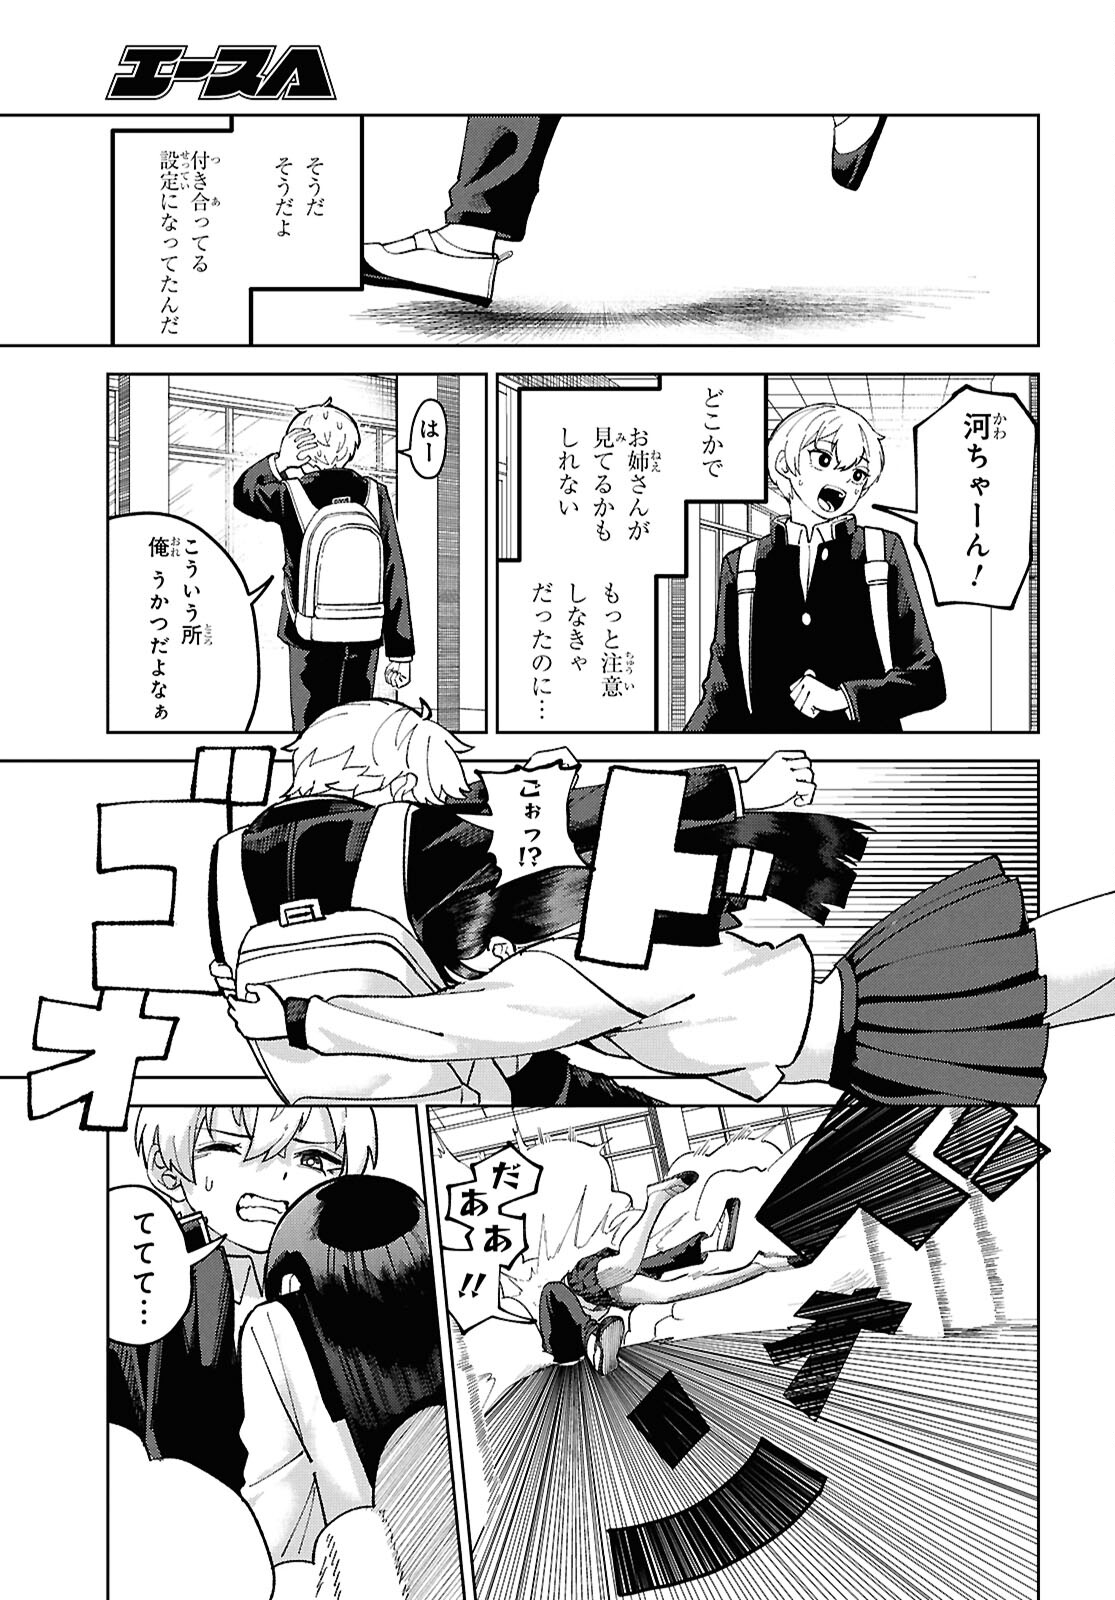 Garuru Girl - Chapter 4 - Page 7